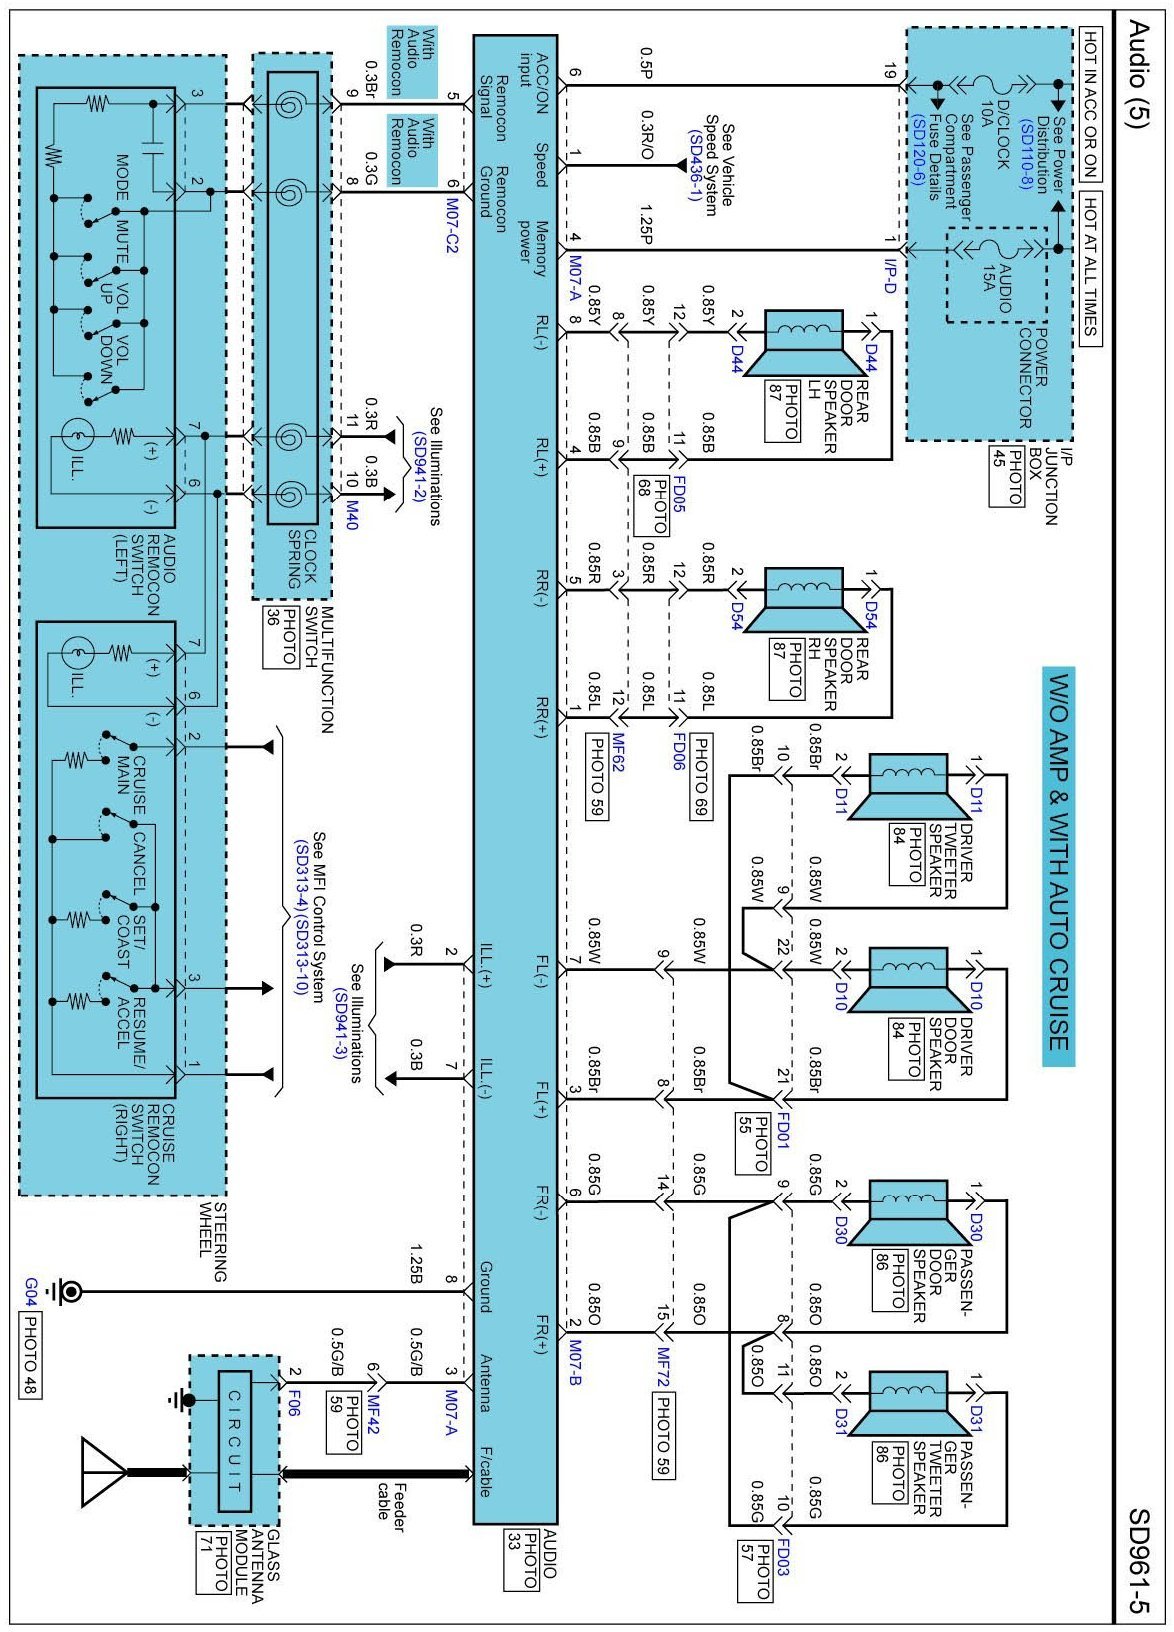 Ford Ranger Tow Bar Wiring Diagram from schematron.org